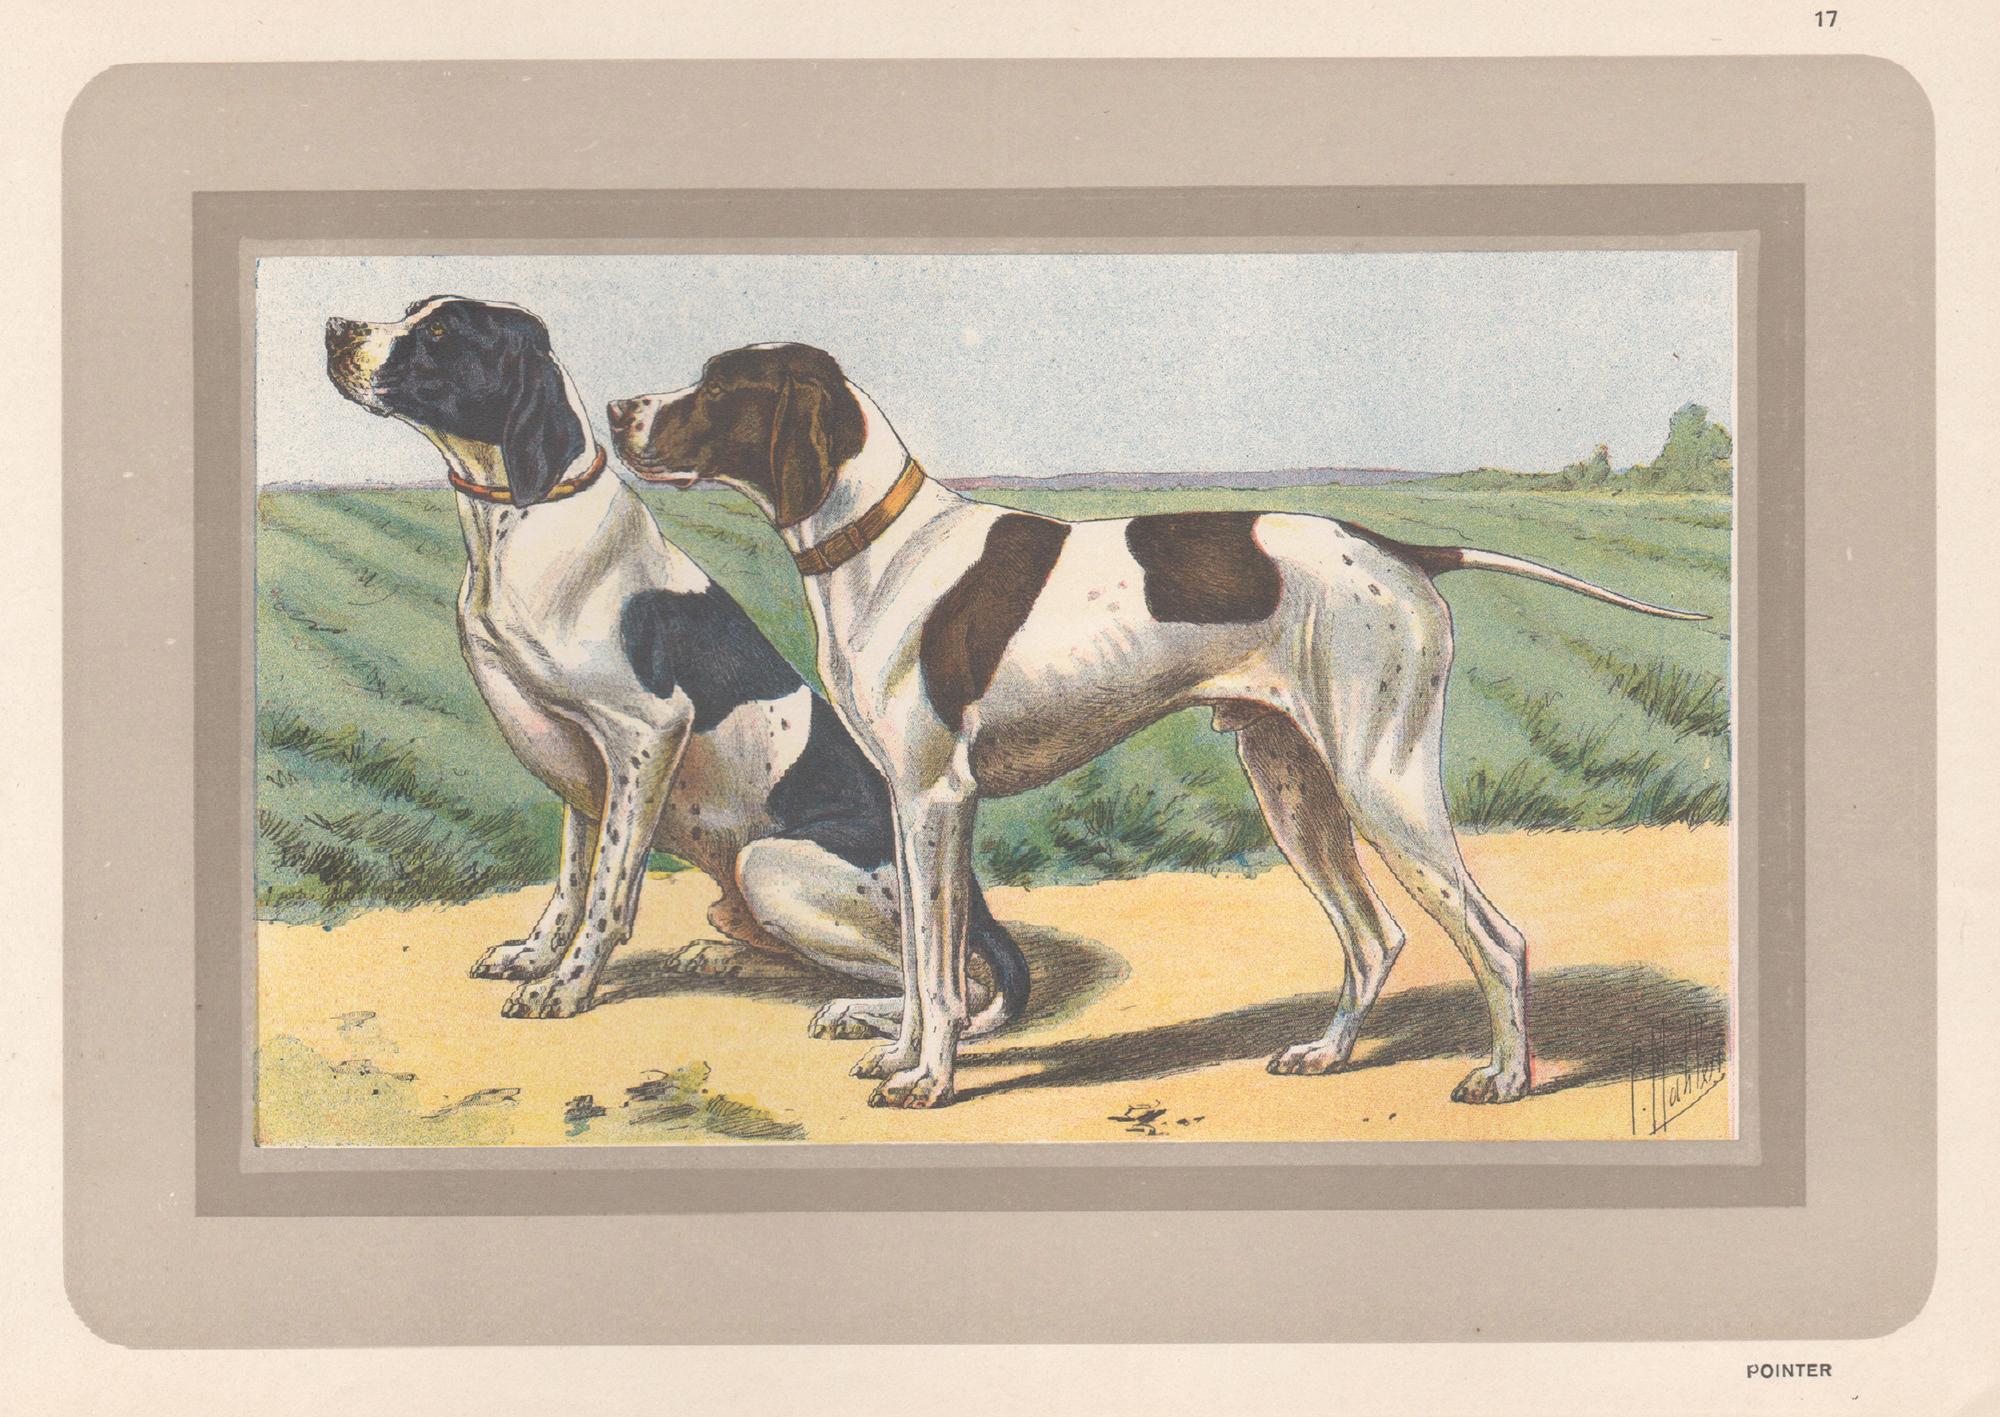 P. Mahler Animal Print - Pointer, French hound dog chromolithograph print, 1930s